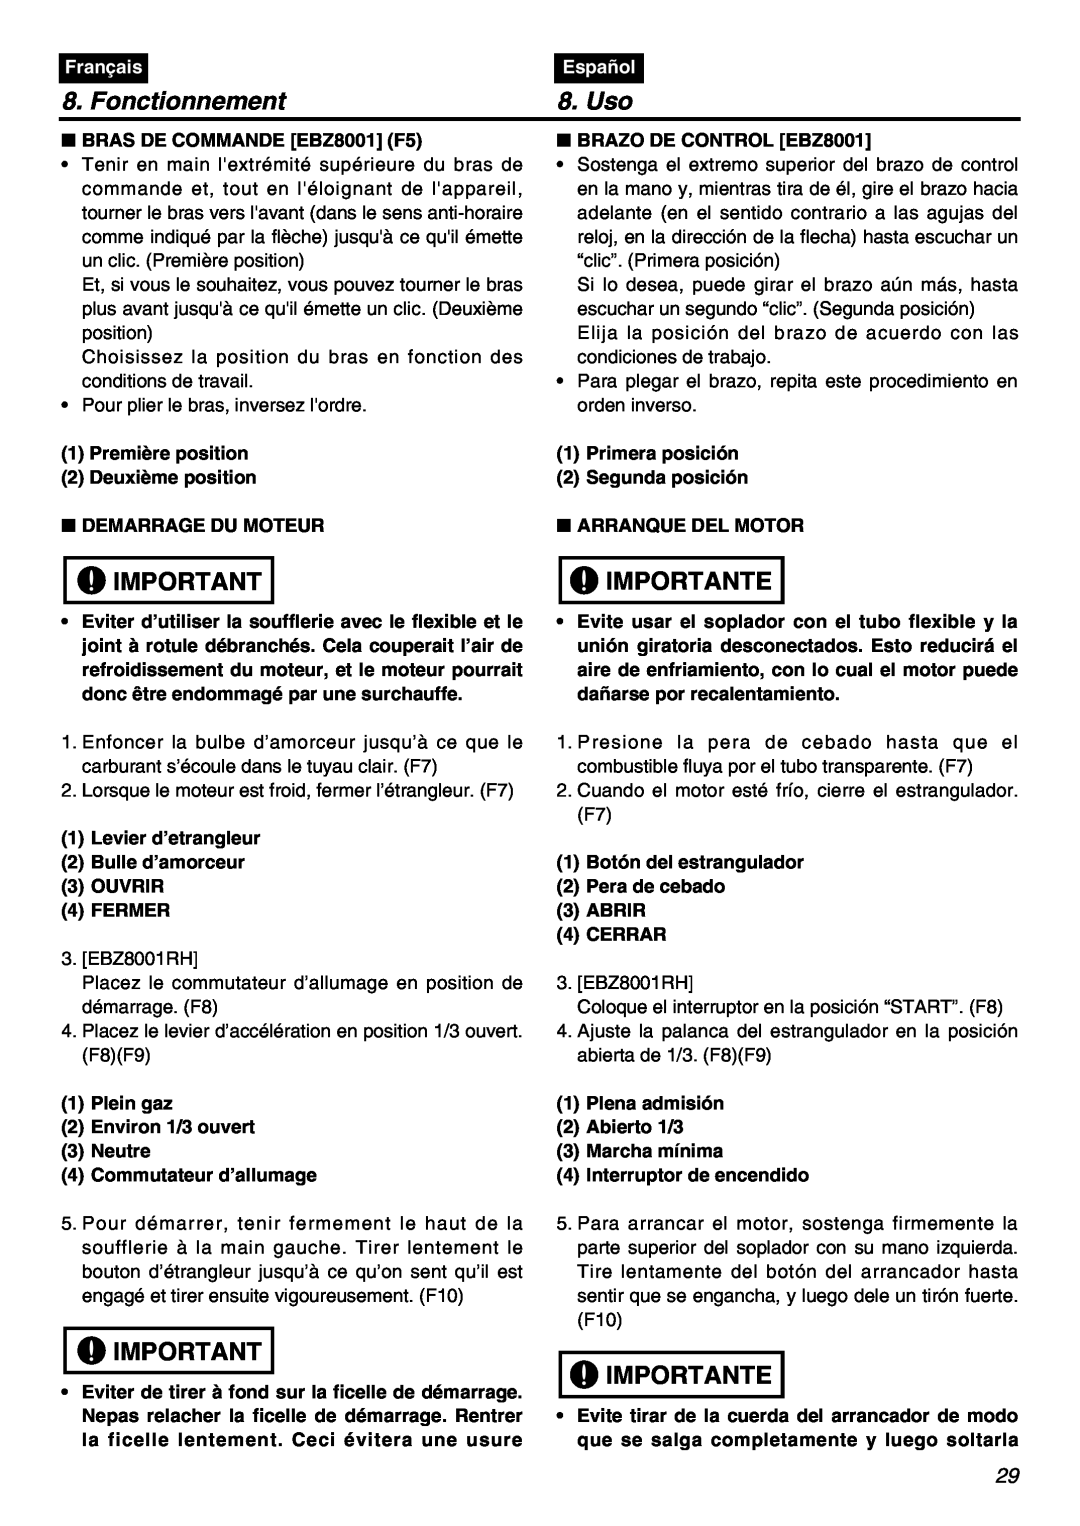 RedMax manual Fonctionnement, Uso, BRAS DE COMMANDE EBZ8001 F5, BRAZO DE CONTROL EBZ8001, Importante, Français, Español 